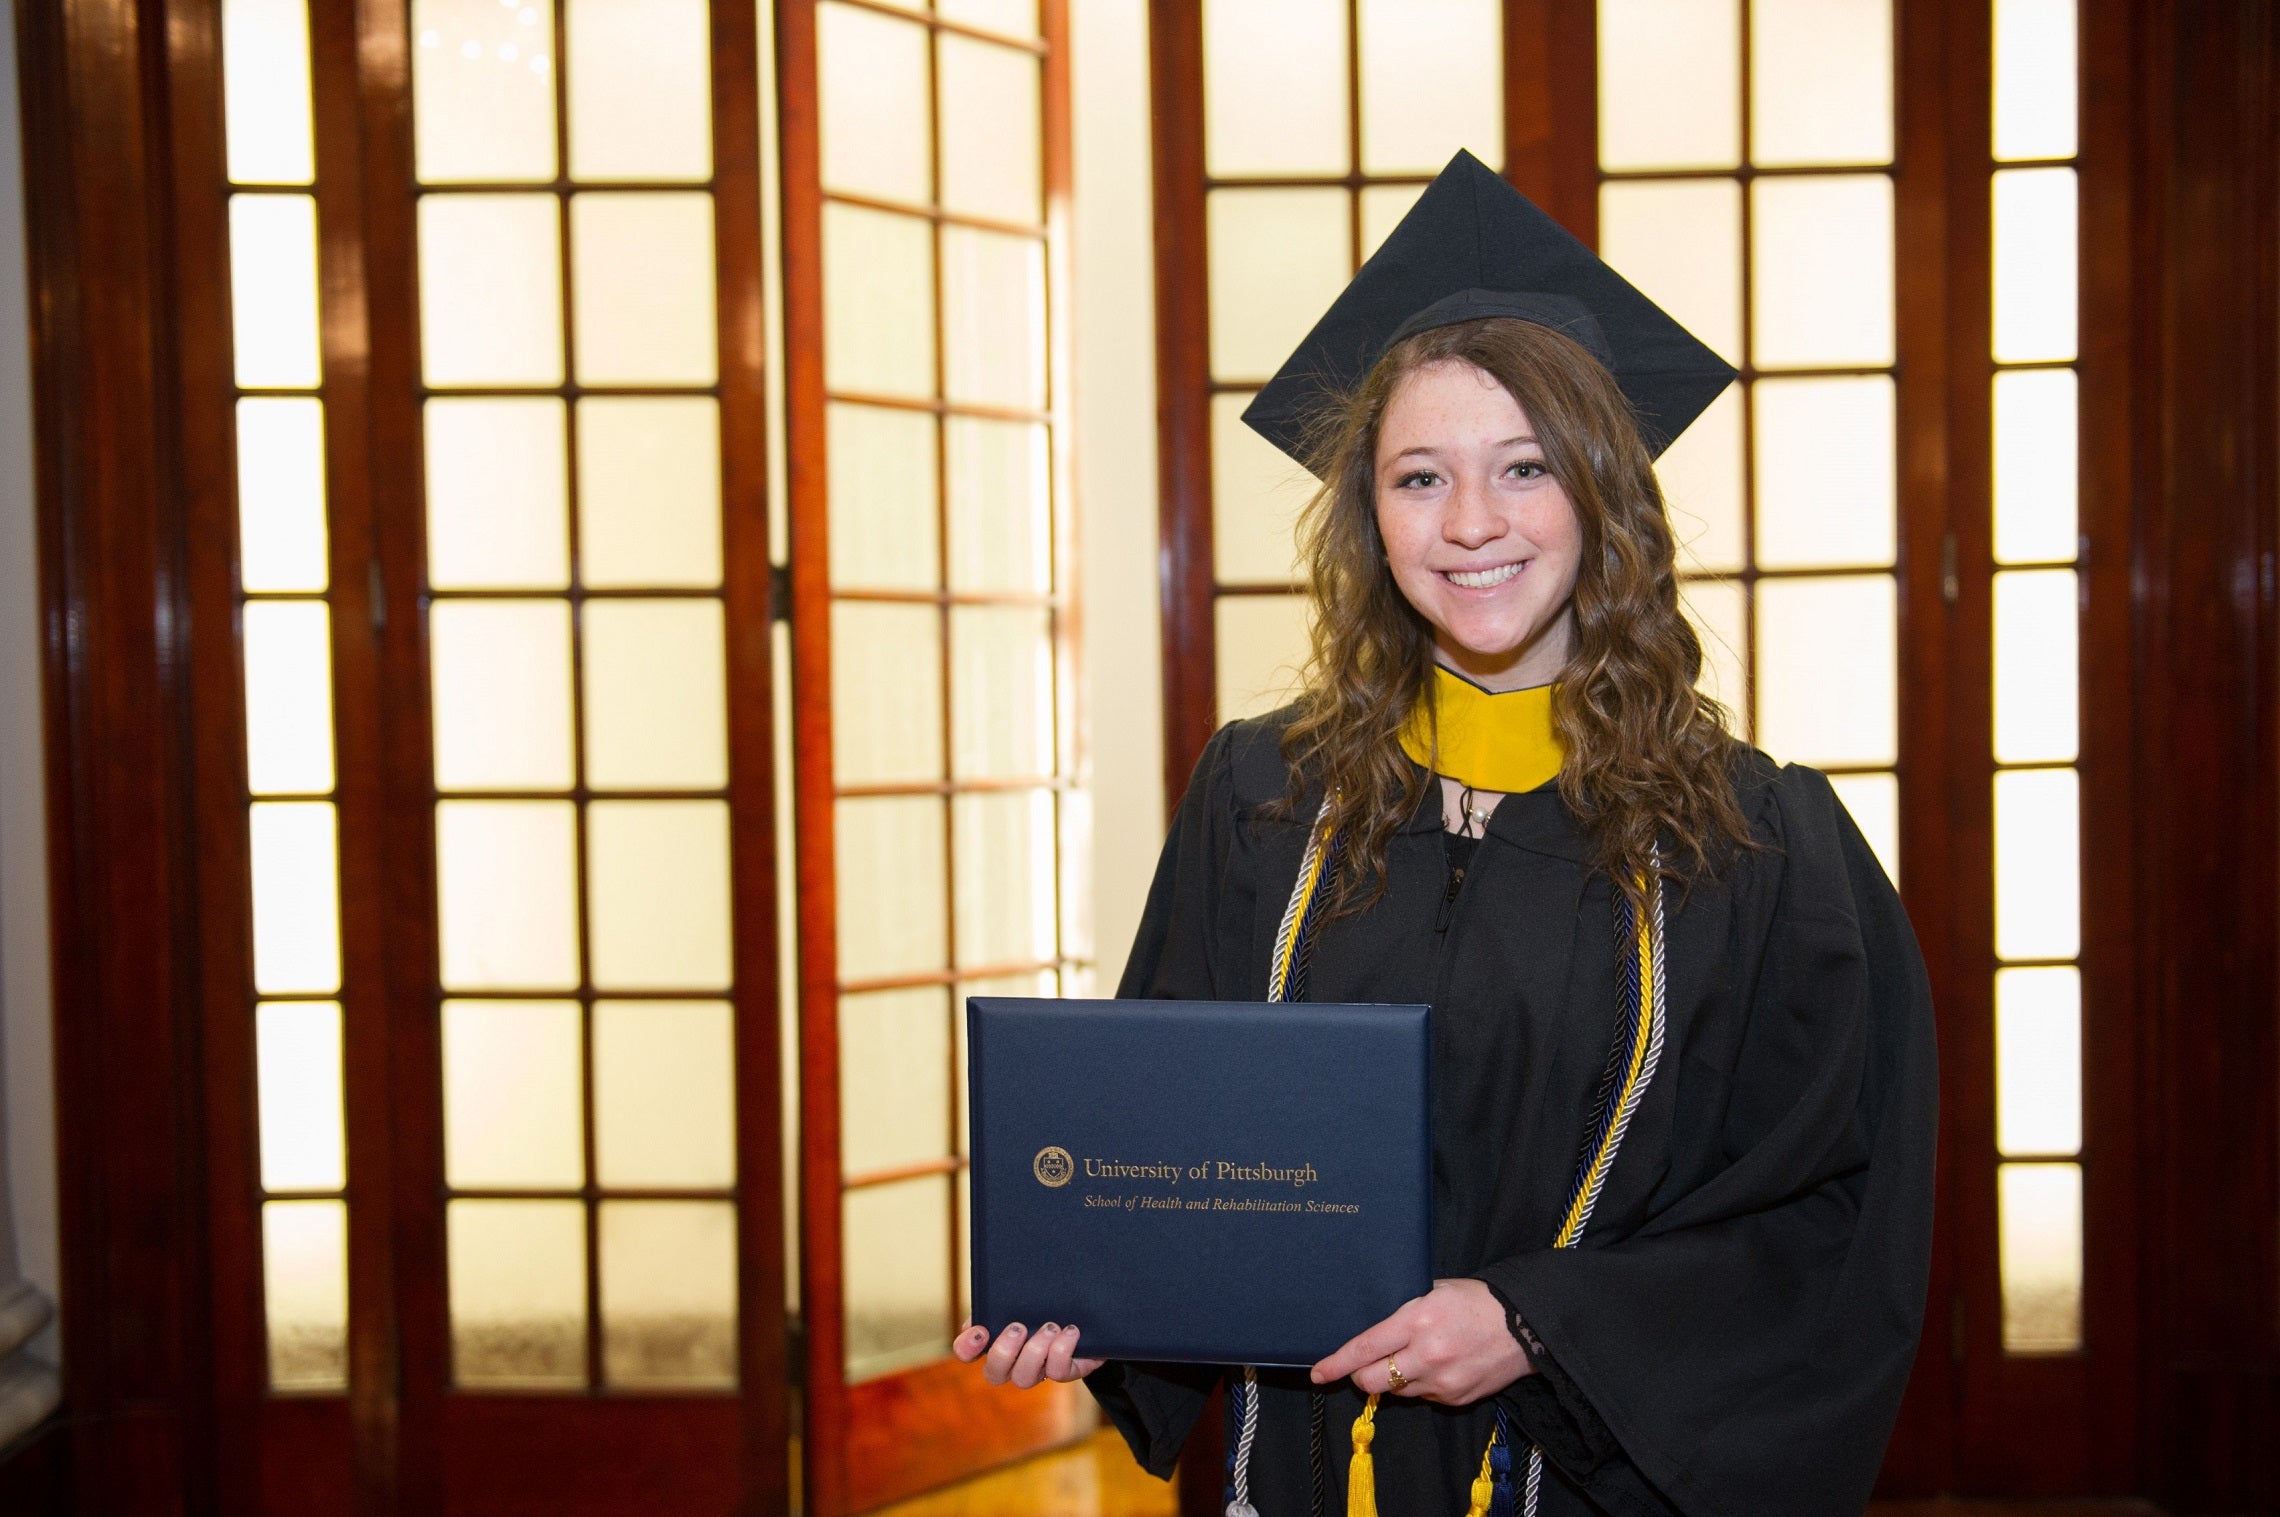 Student in regalia holding degree